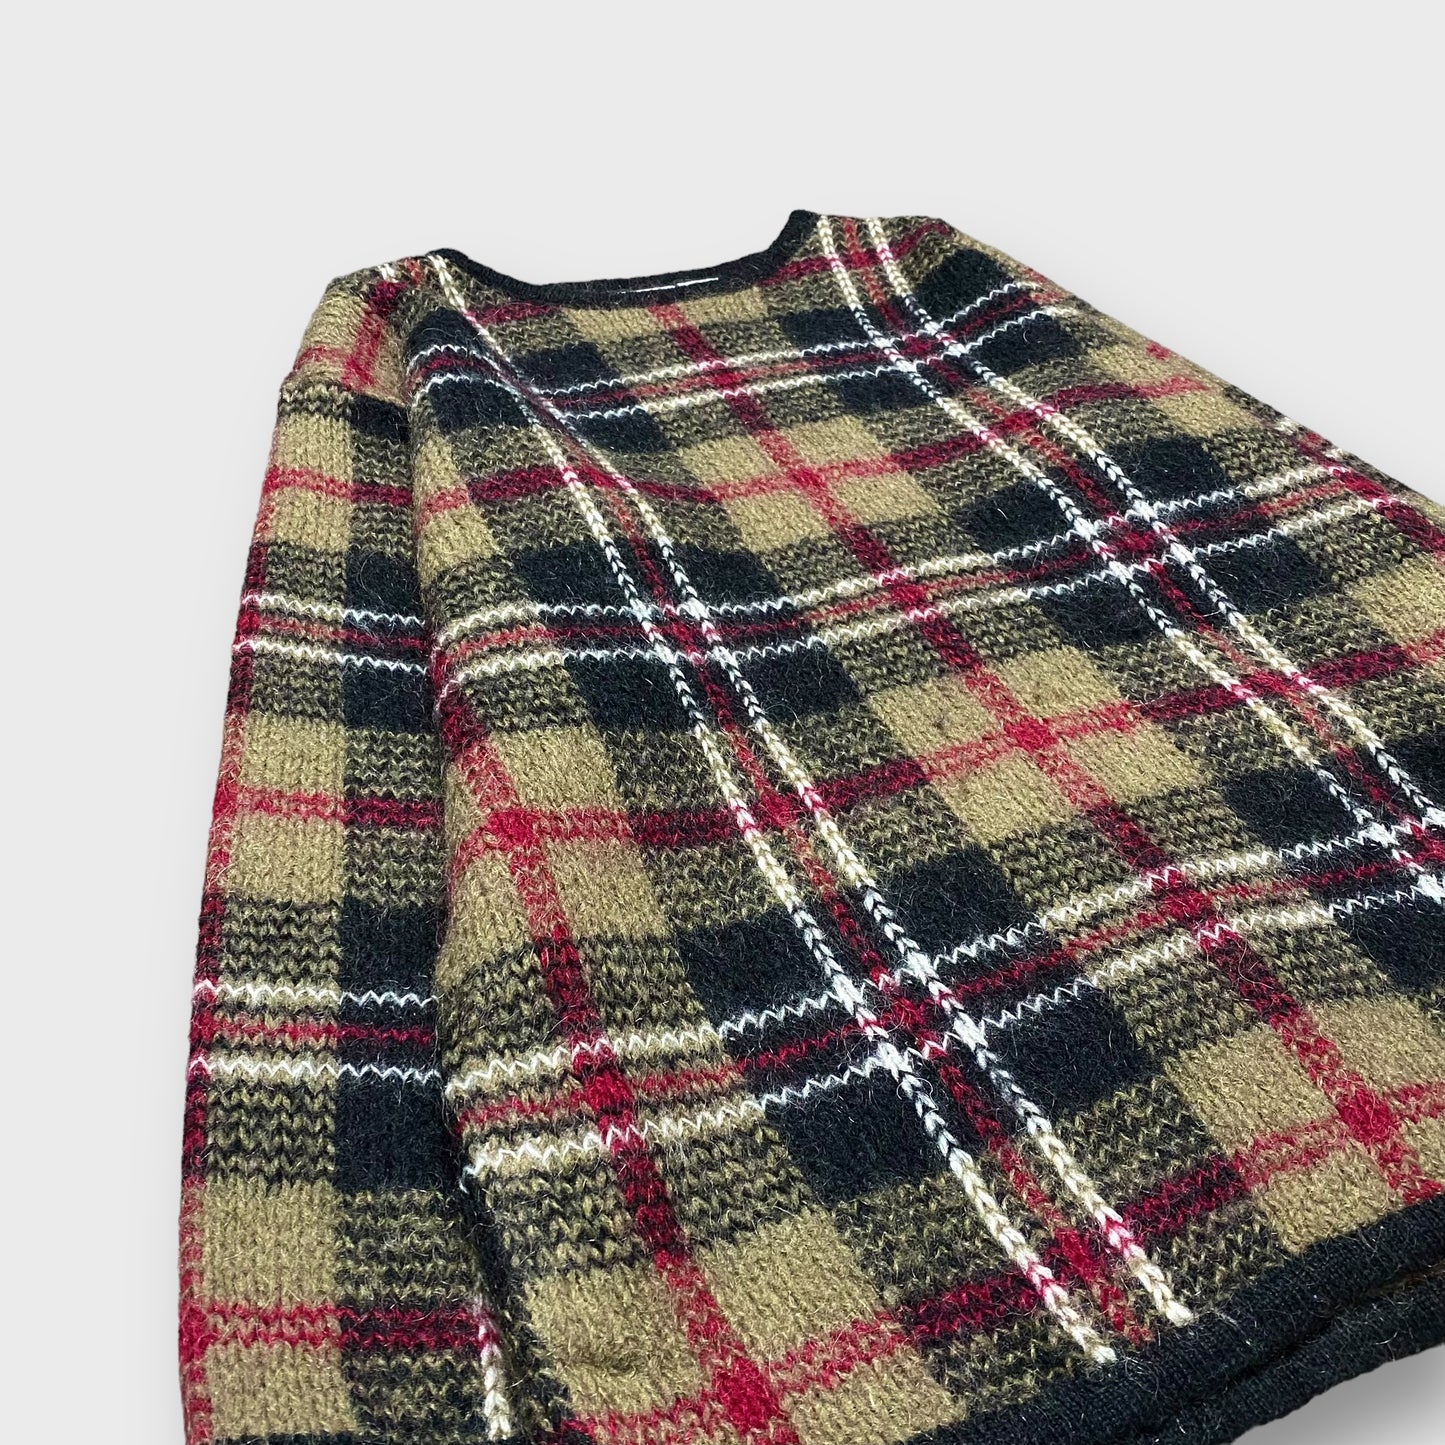 90's PAUL HARRIS DESIGN" Plaid pattern mohair knit sweater